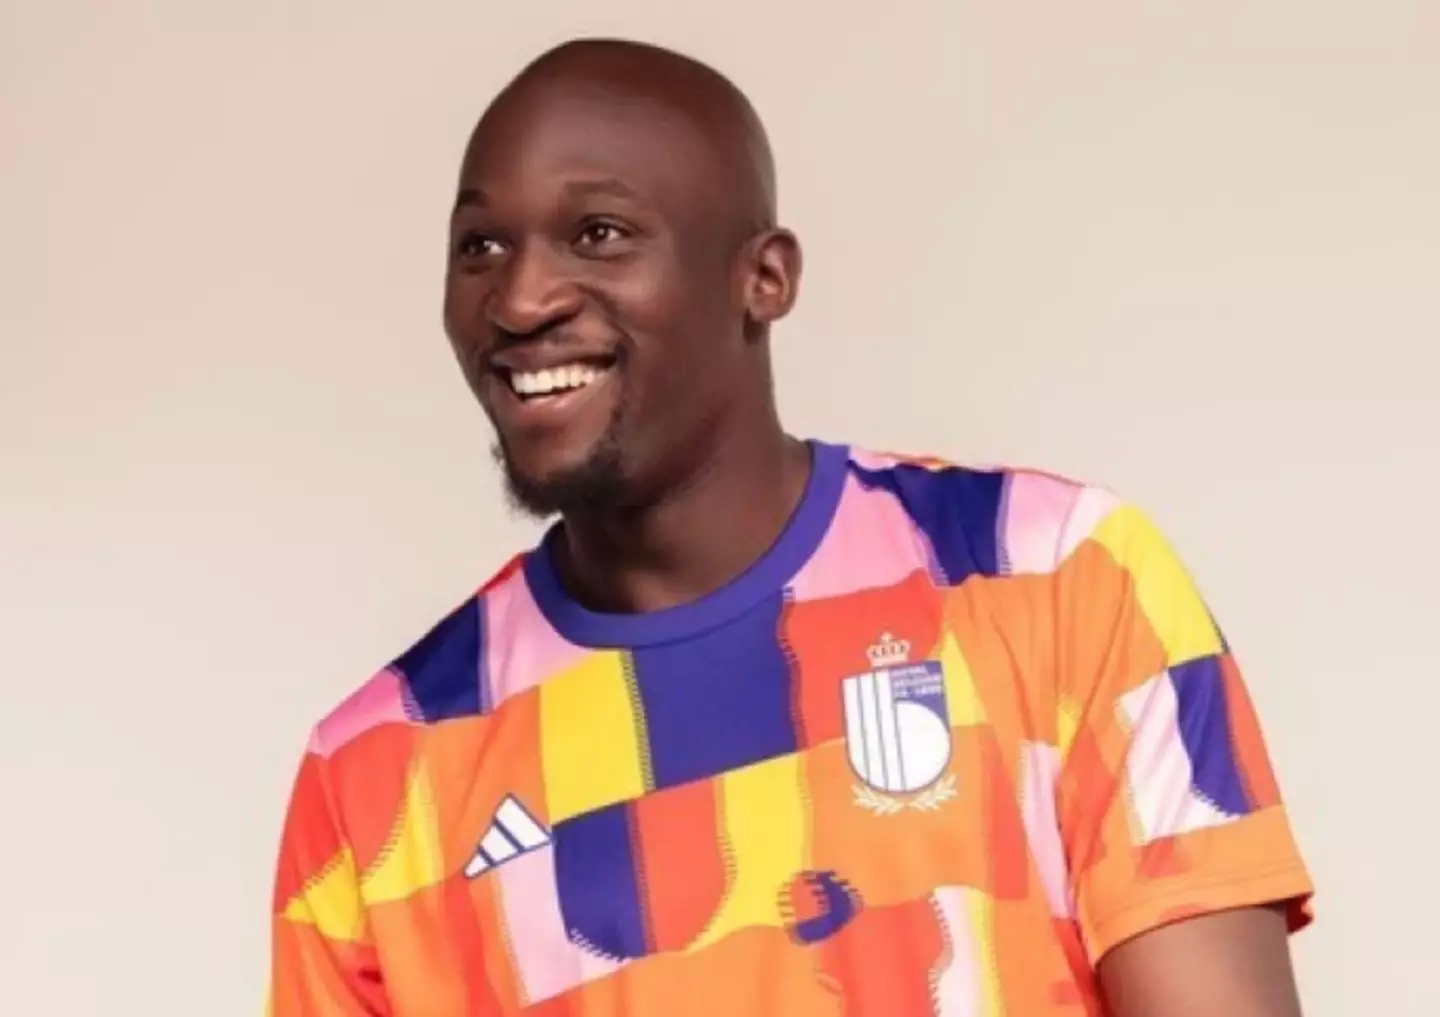 Romelu Lukaku in the shirt, developed by Adidas. (Image